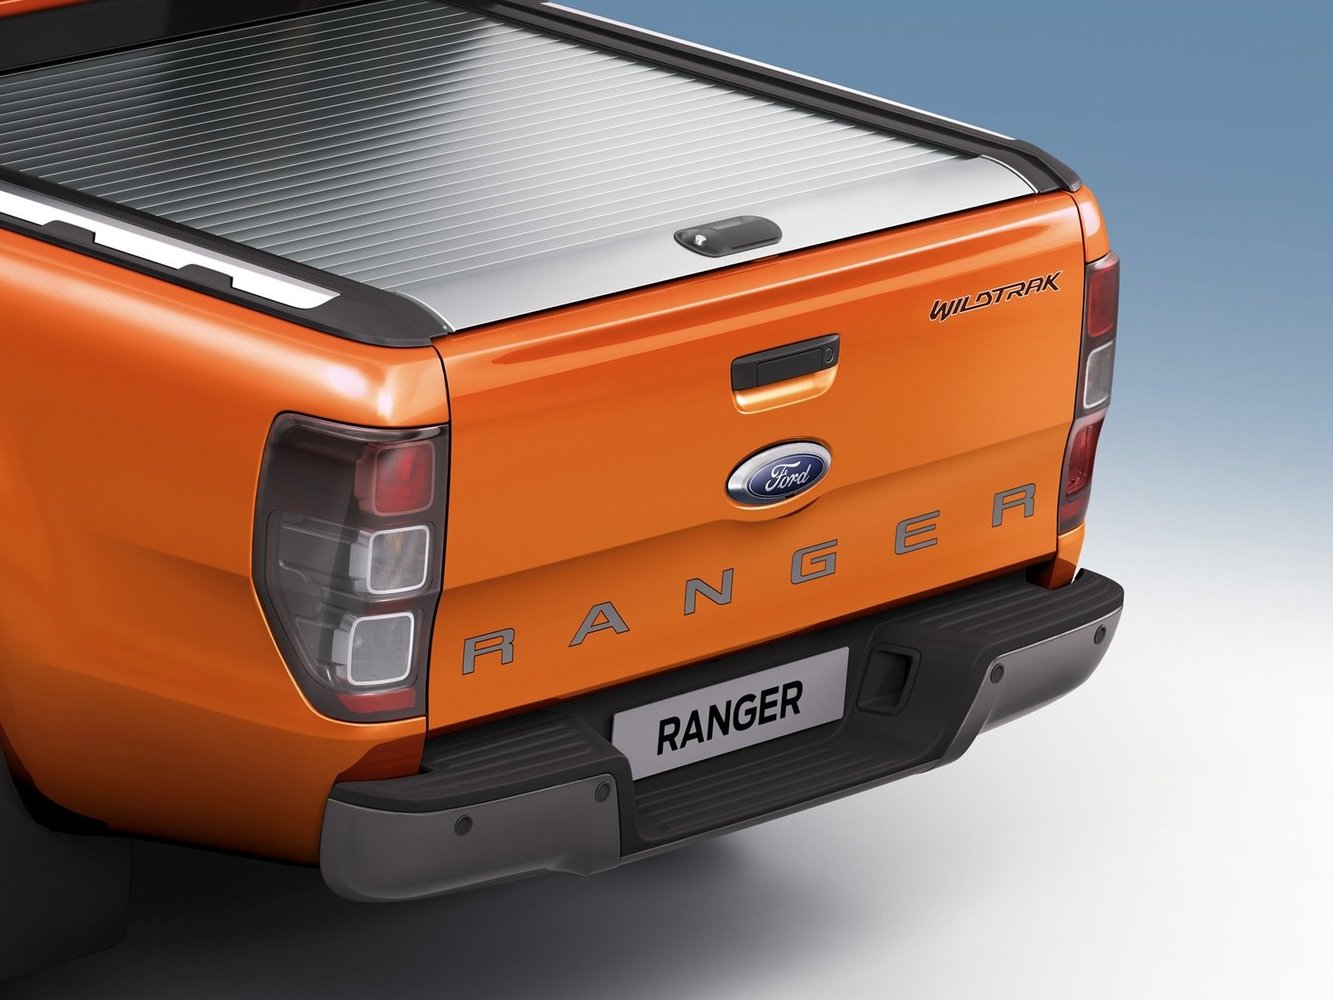 пикап 2 дв. Ford Ranger 2012 - 2015г выпуска модификация 2.2 AT (150 л.с.) 4×4